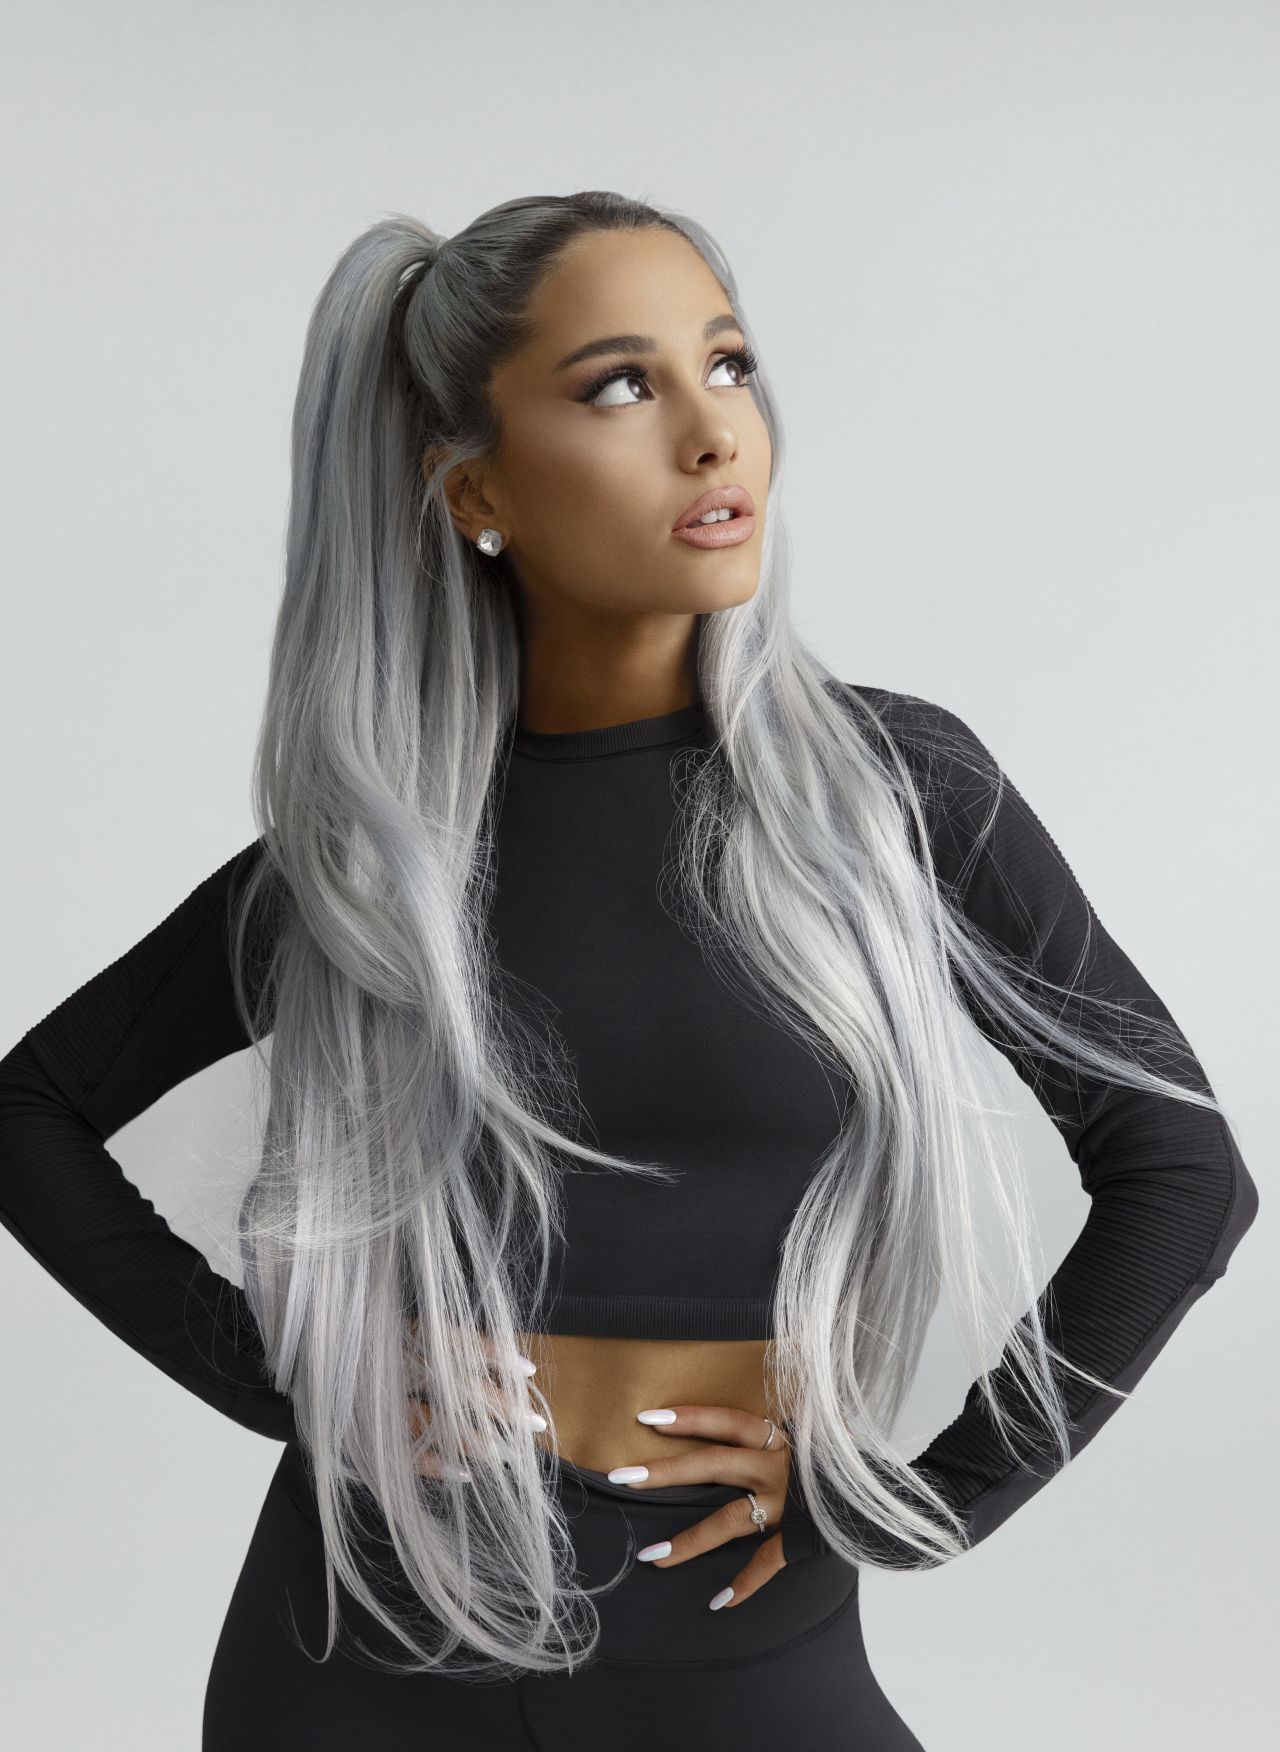 Ariana Grande Reebok "Be More Human" Campaign Photoshoot 2018 CelebMafia